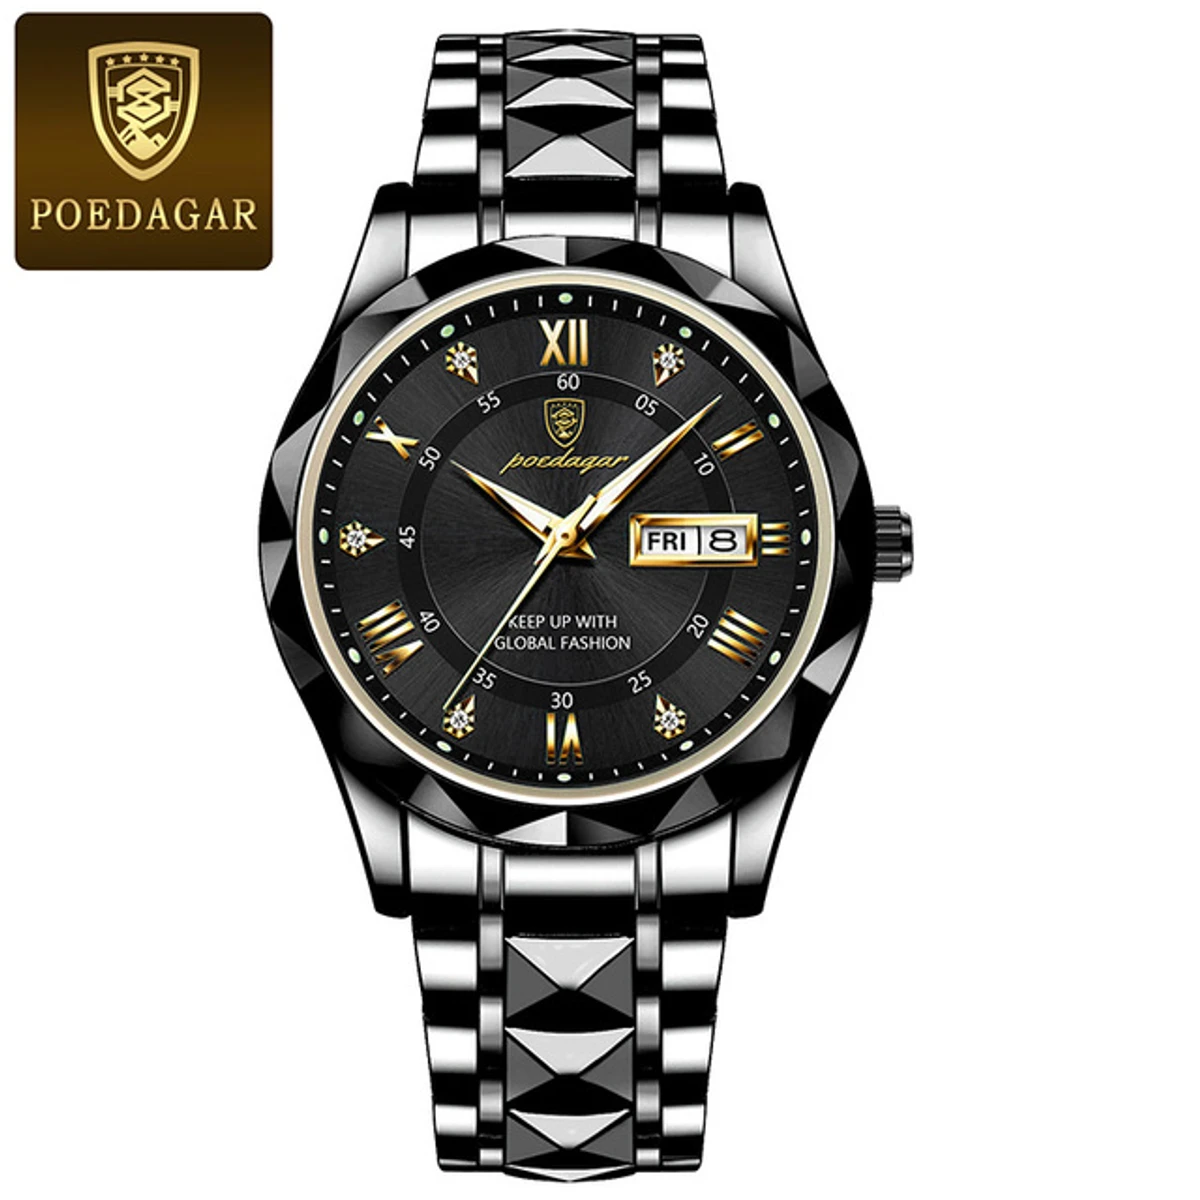 POEDAGAR Brand Fashion Mens Watch Luxury Top Business Stainless Steel Waterproof Wristwatches Male Sport Luminous Date Man Clock- Black